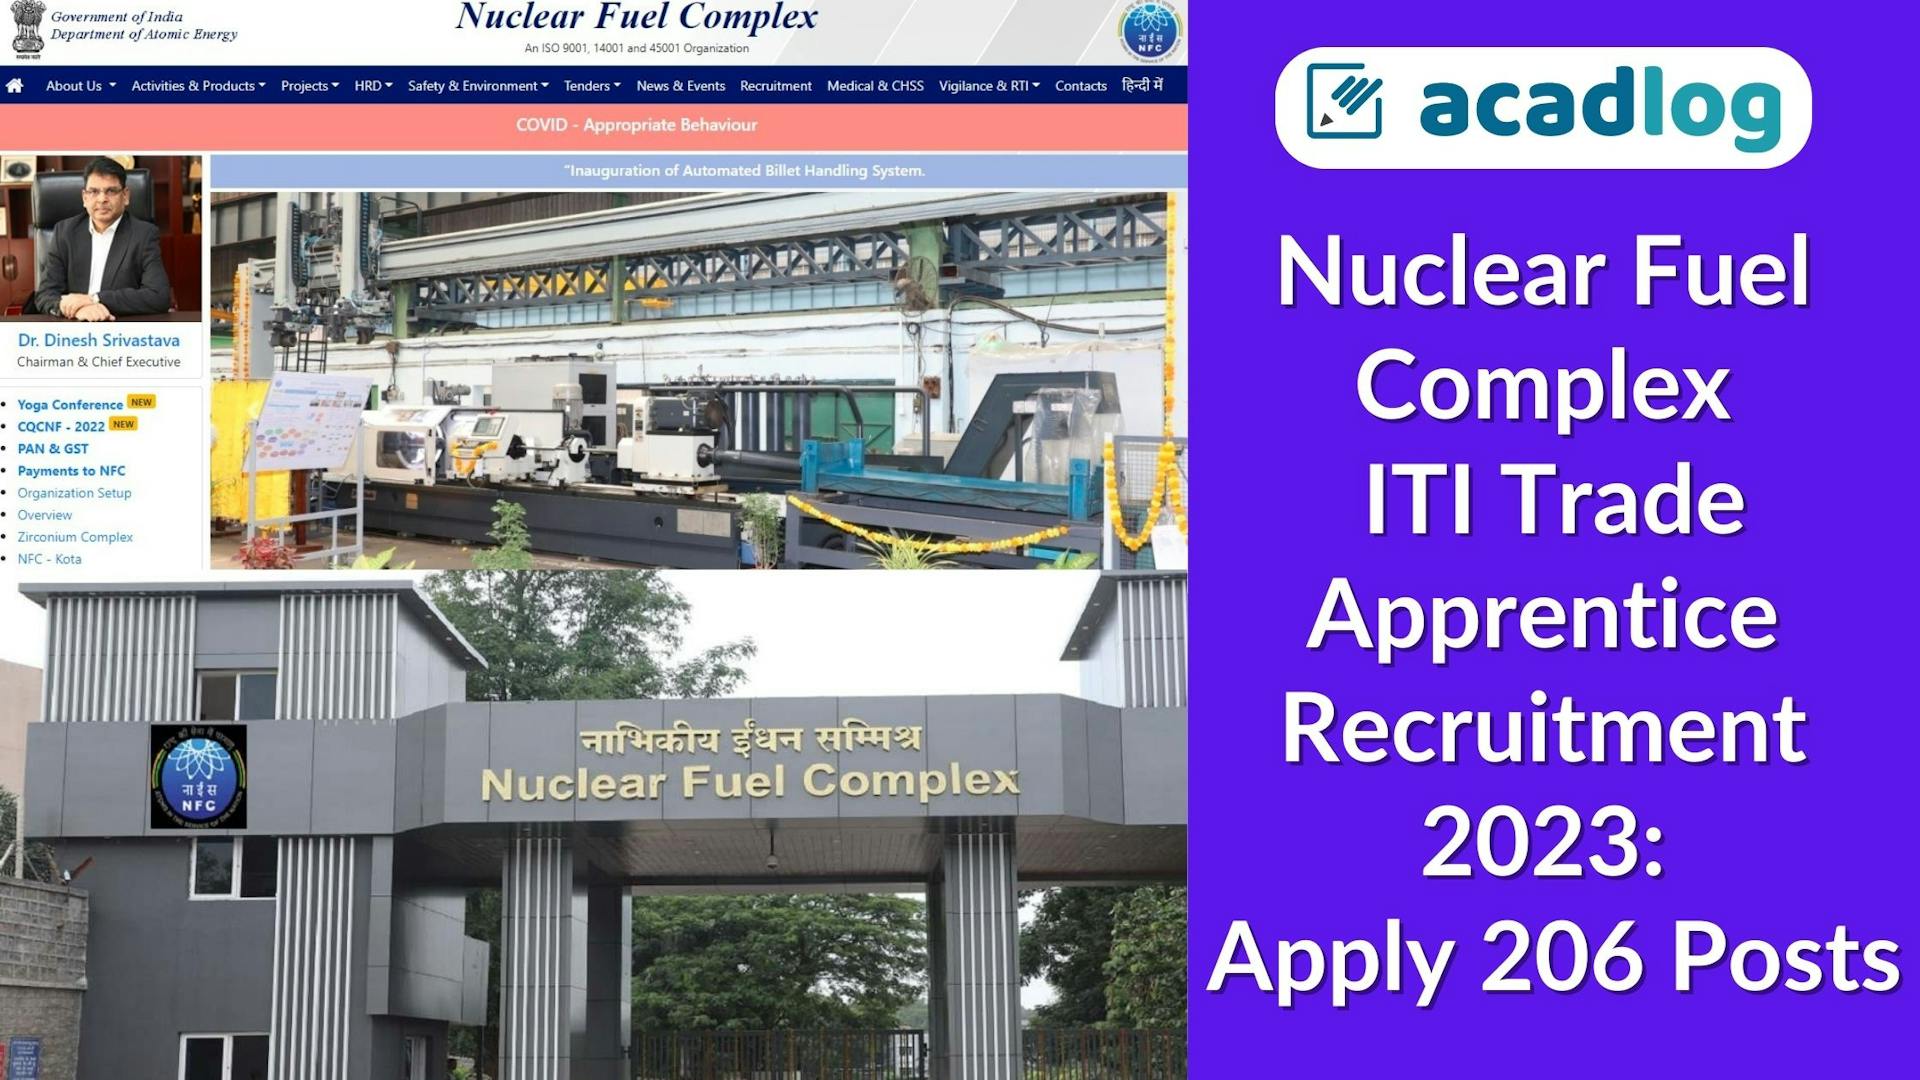 Contract Govt Jobs 2023: Recruitment for NFC ITI Trade Apprentice (206 Posts)